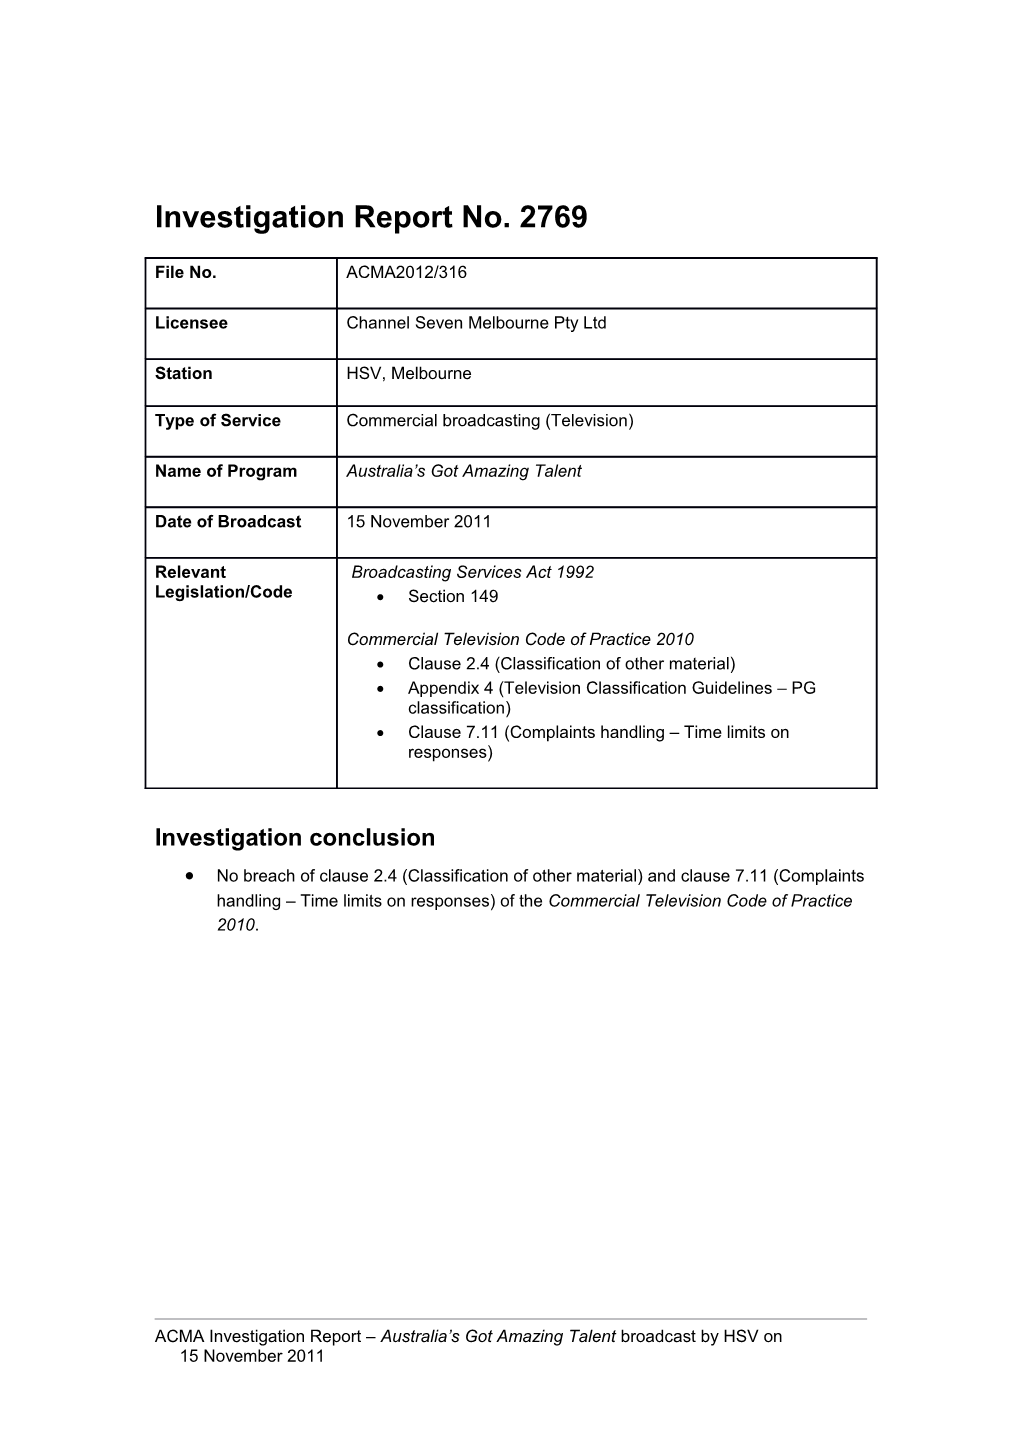 HSV7 - ACMA Investigation Report 2769